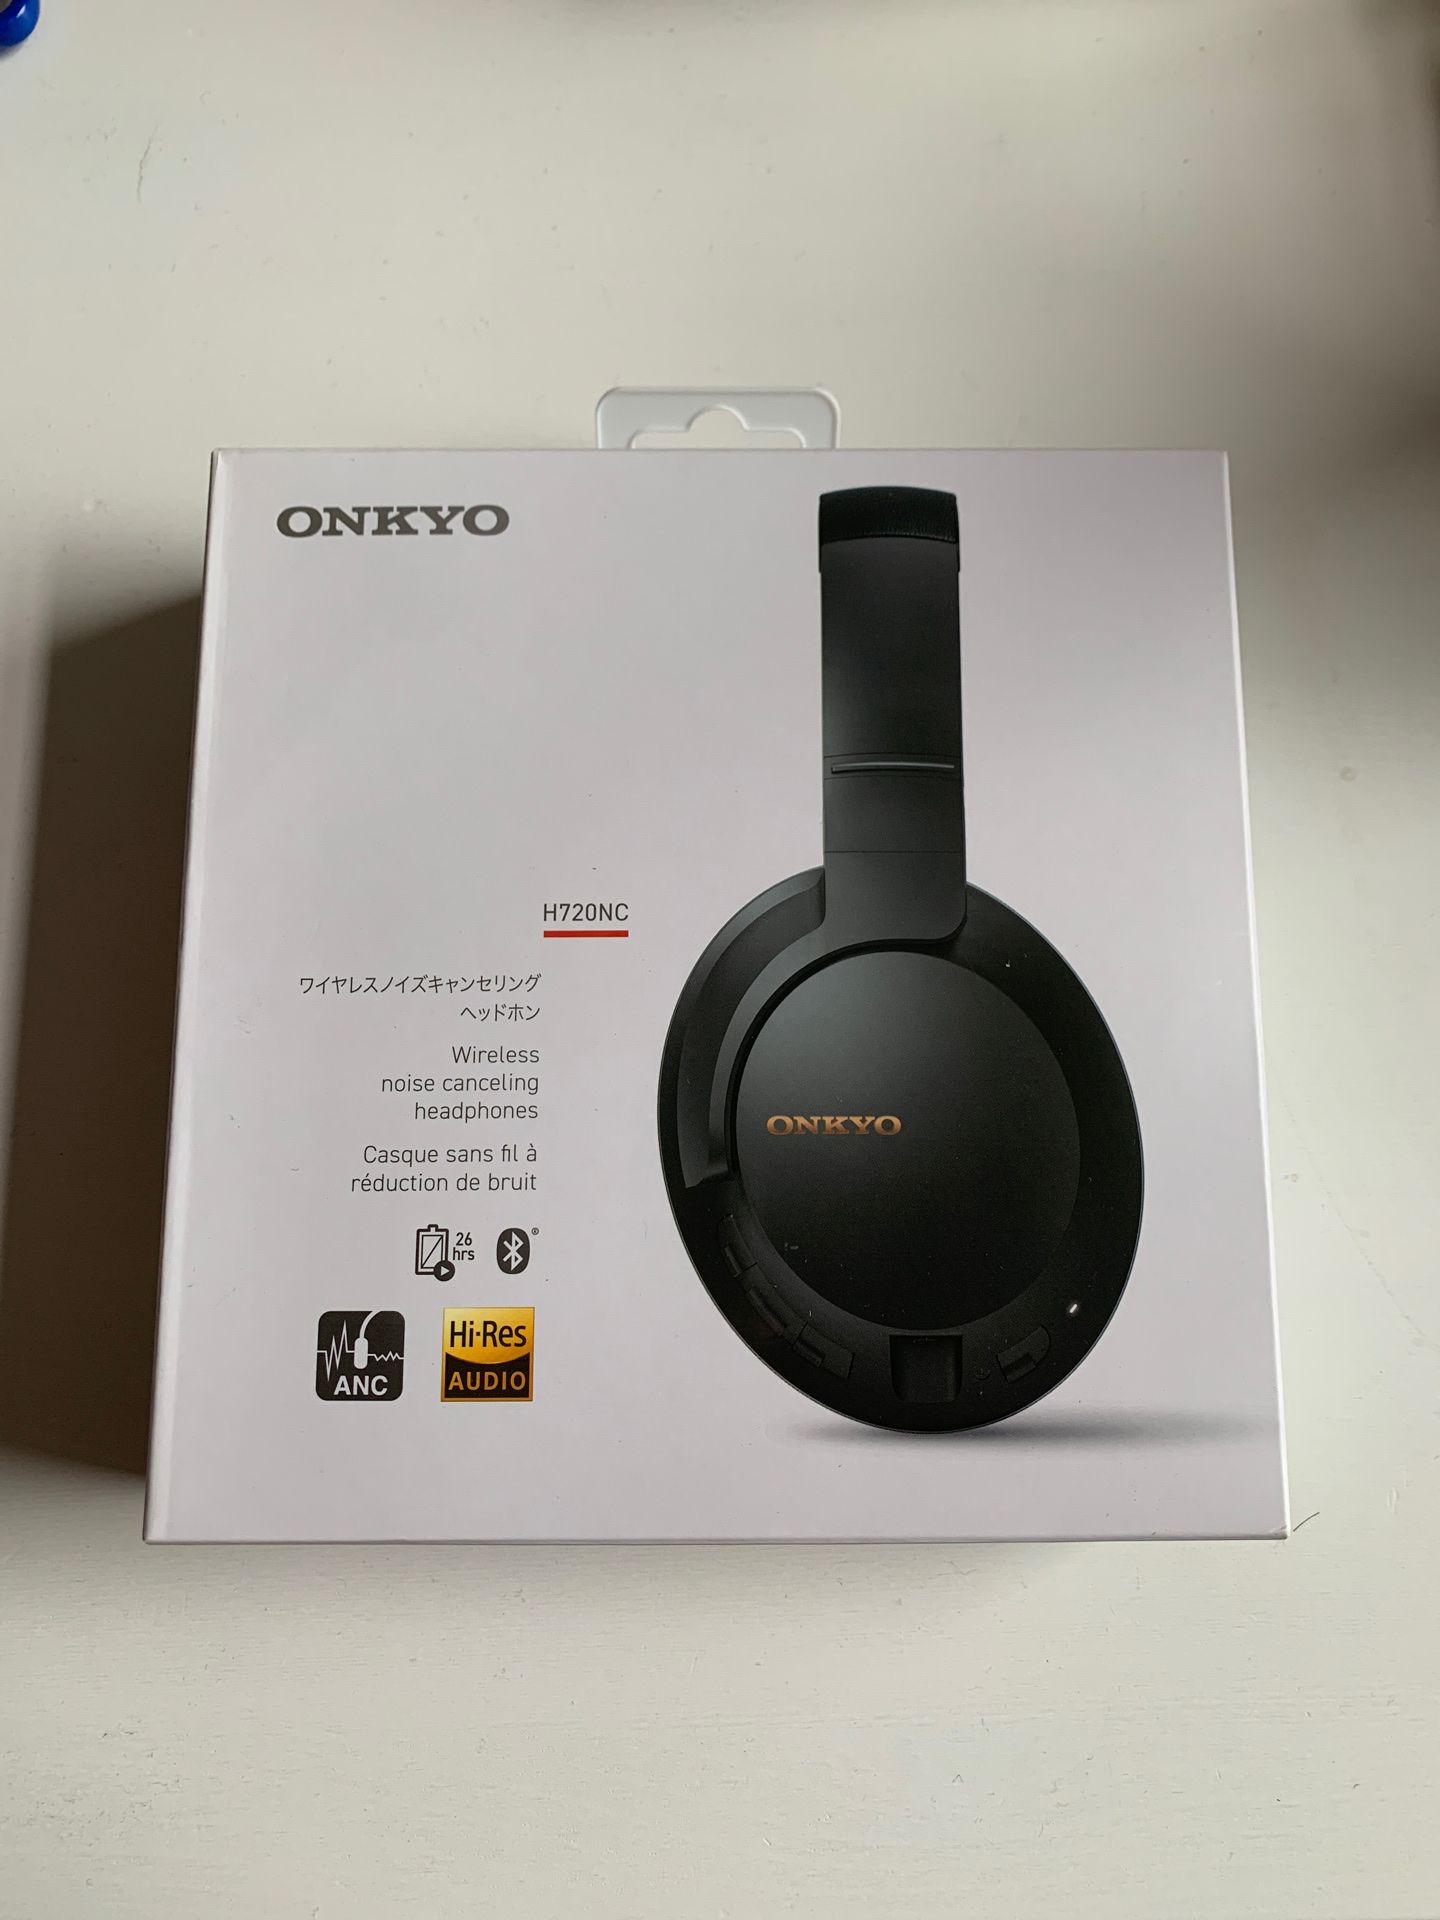 ONKYO Wireless noise canceling headphones